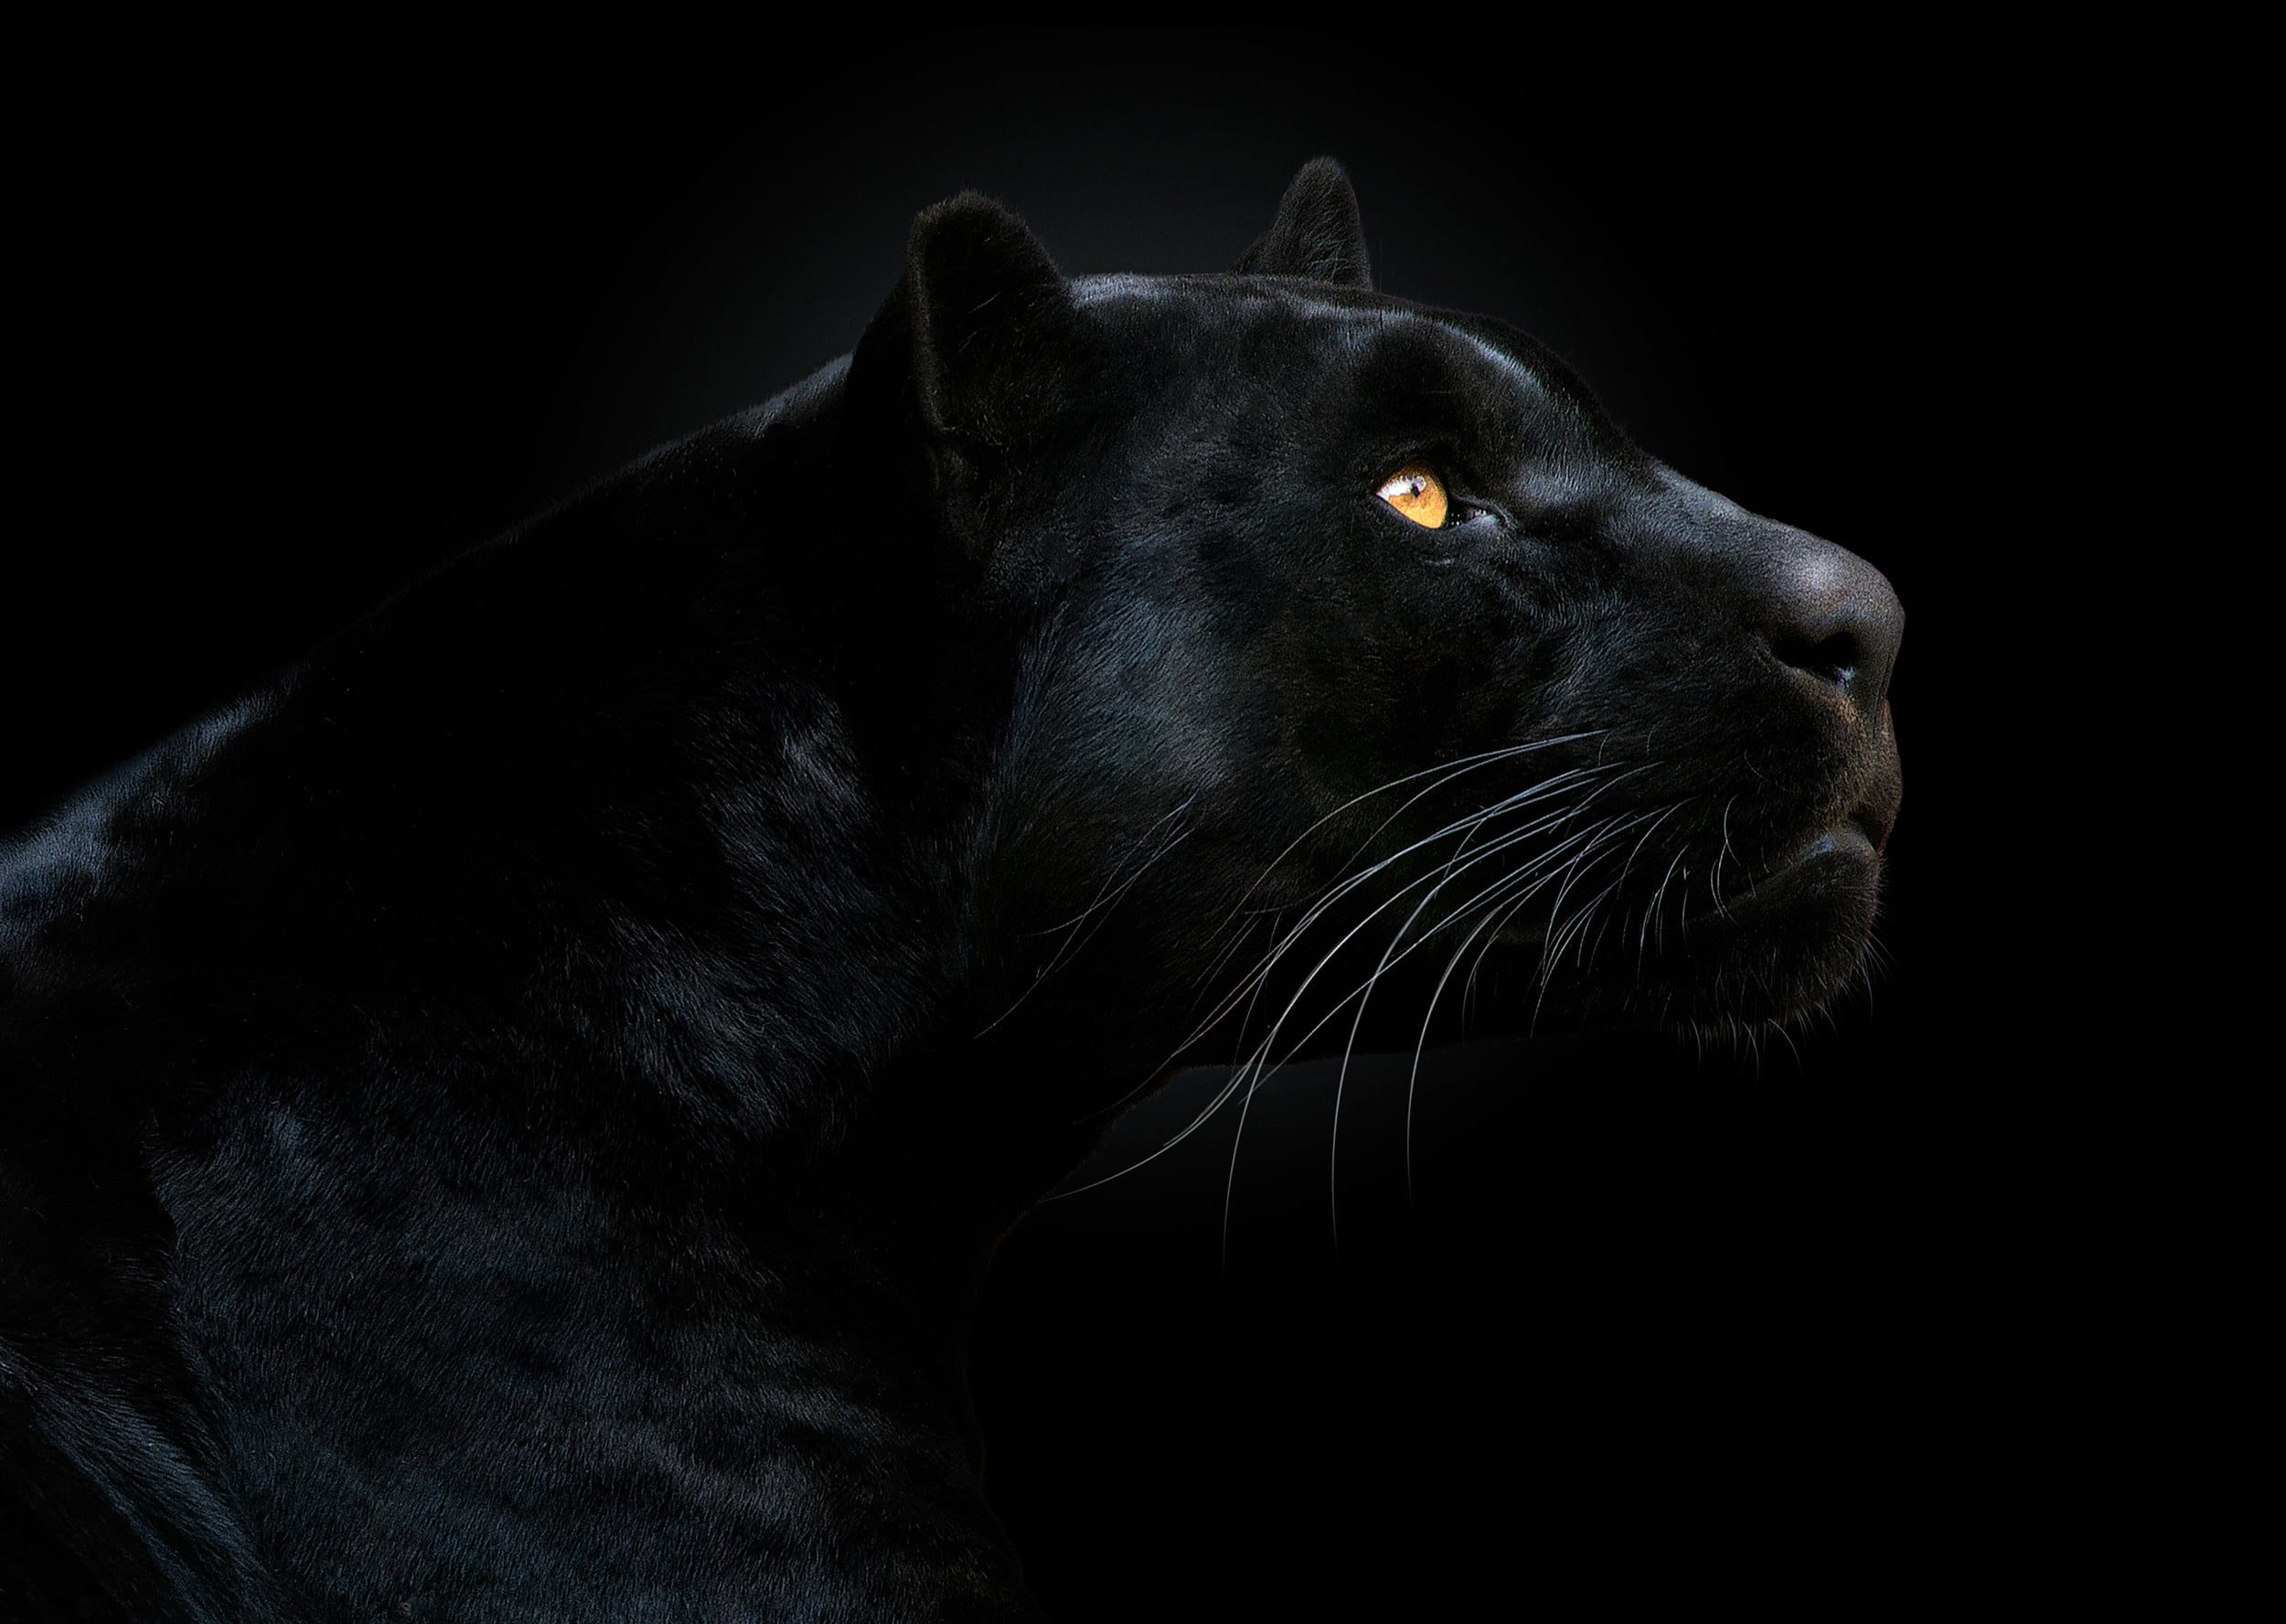 black panther illustration, look, face, the dark background, animal